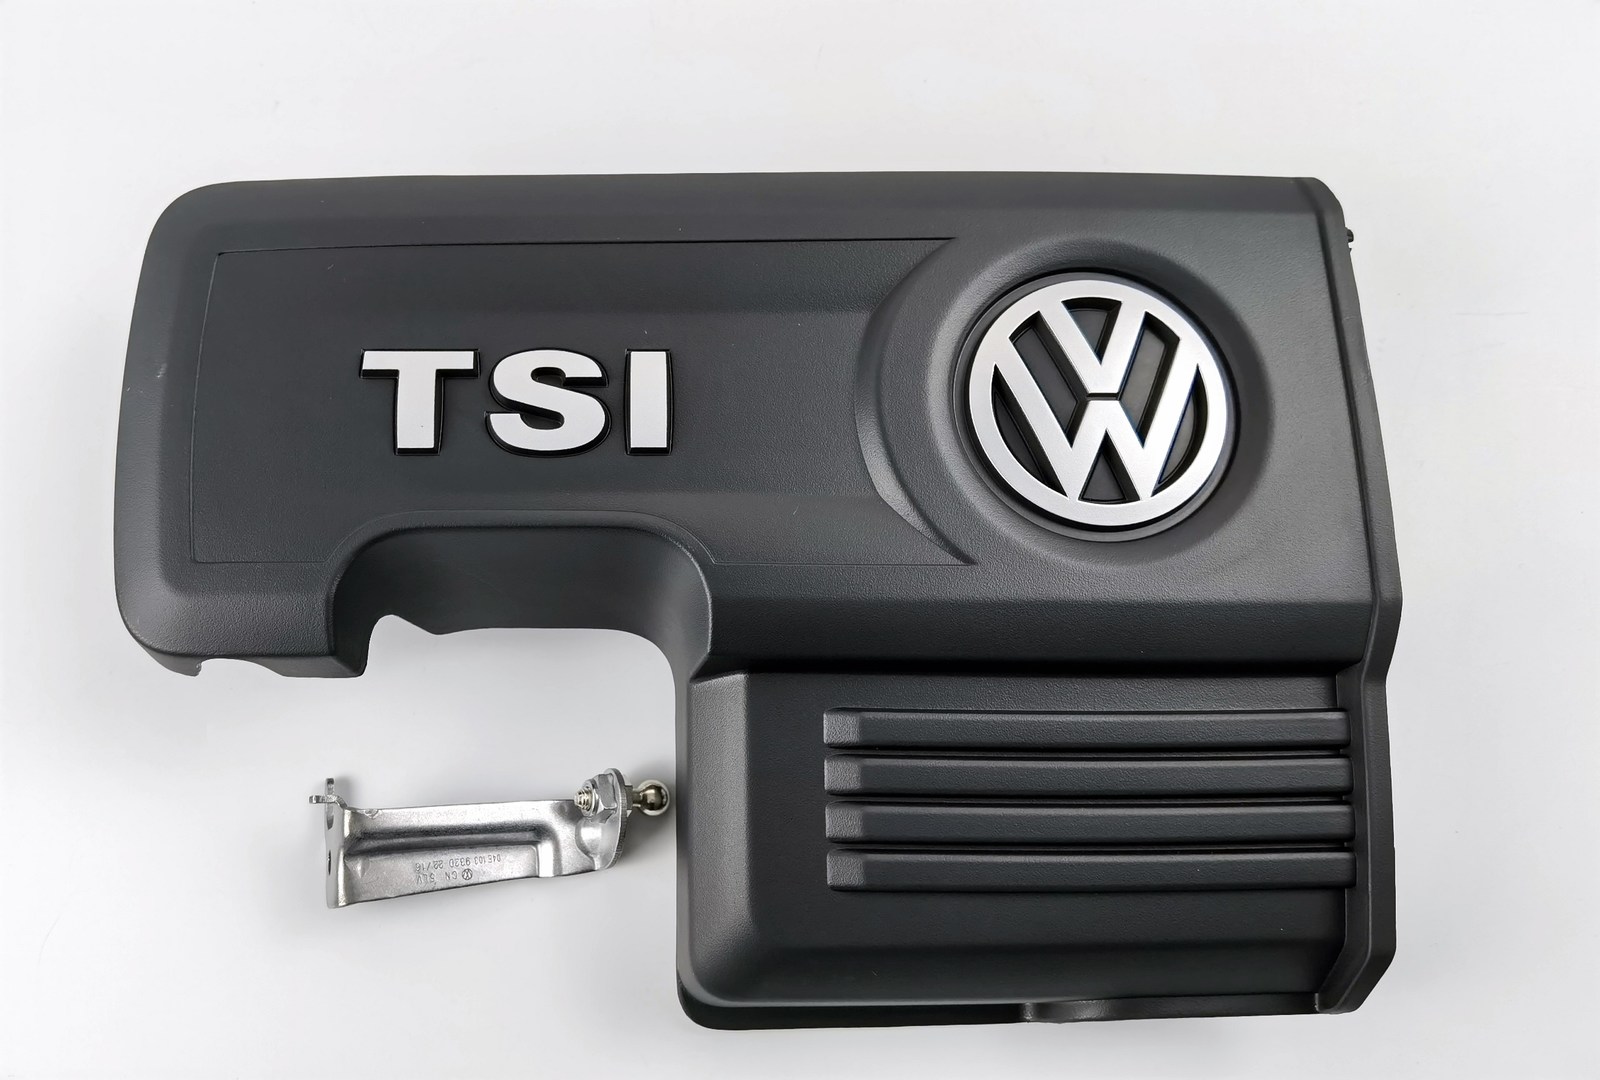  VW フォルクスワーゲン 純正品 1.4T エンジンカバー キット 取付ステー付 ゴルフ ポロ トゥーラン パサート 他 欧車パーツBASE